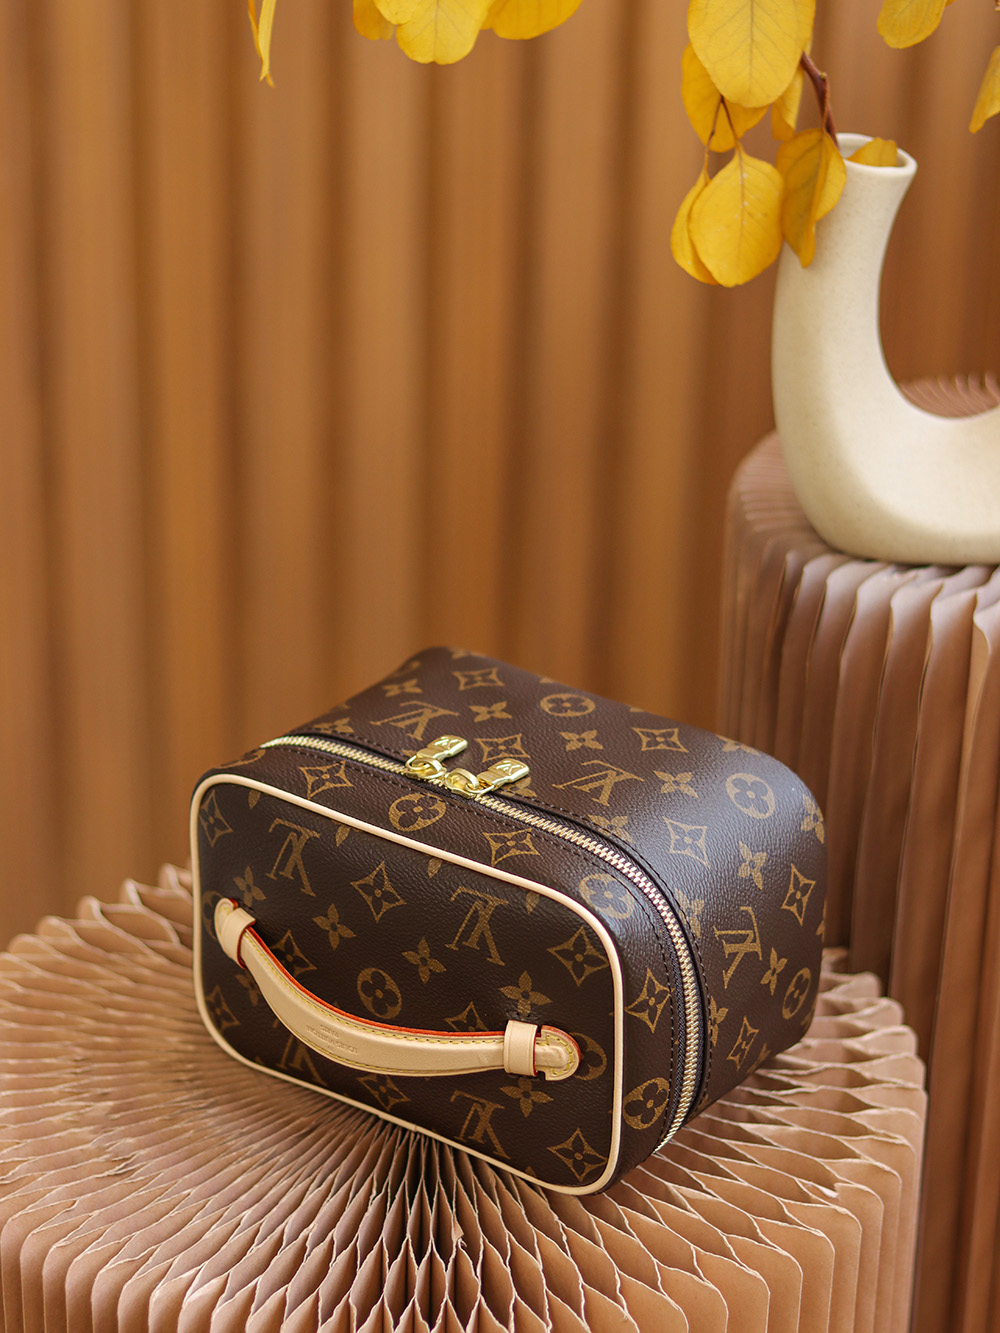 Shop Louis Vuitton MONOGRAM Nice mini toiletry pouch (M44495) by inthewall